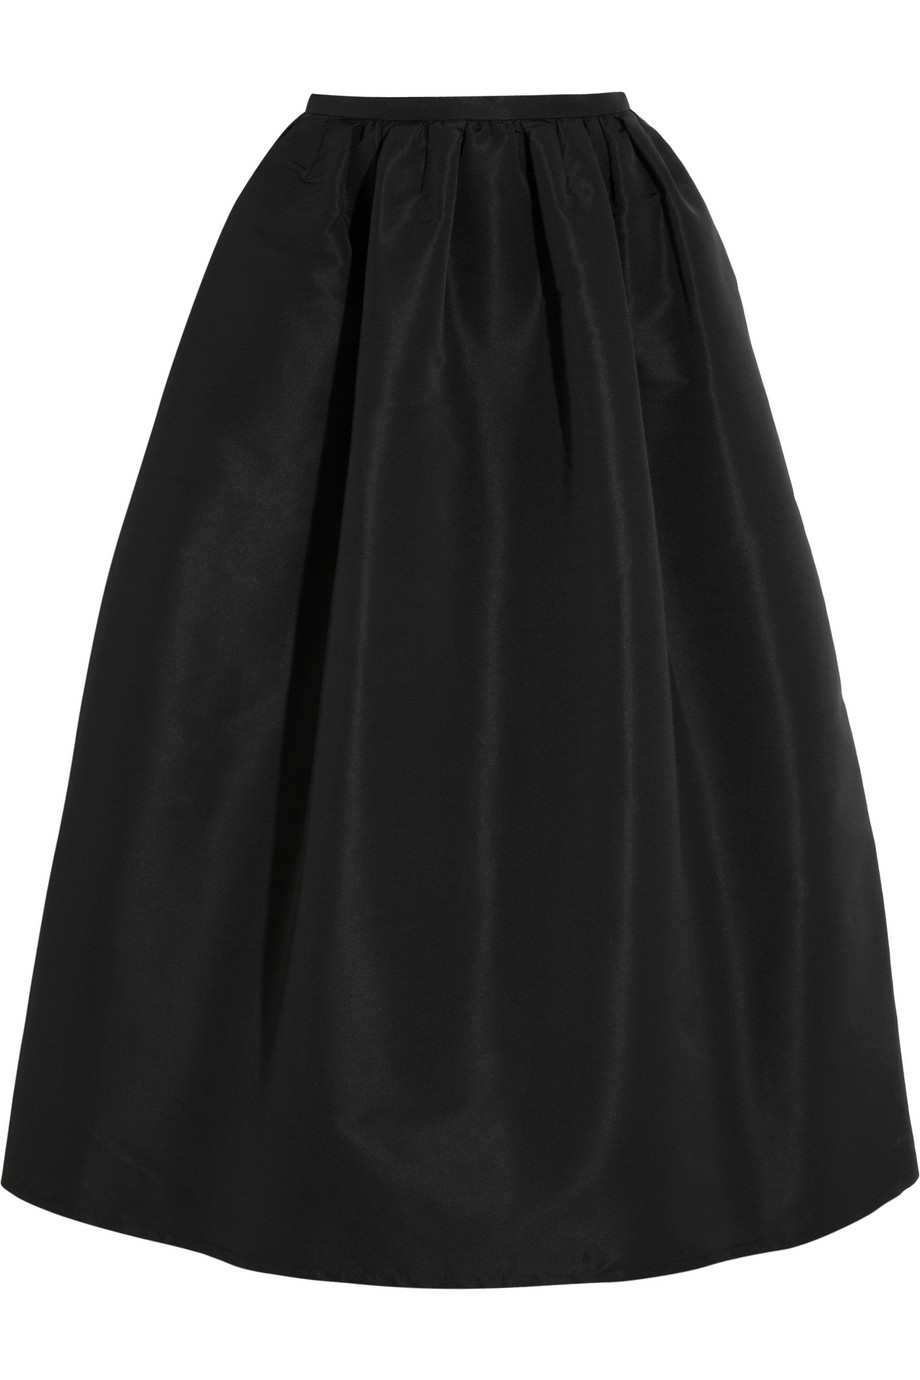 Red Valentino Taffeta Maxi Skirt in Black | Lyst